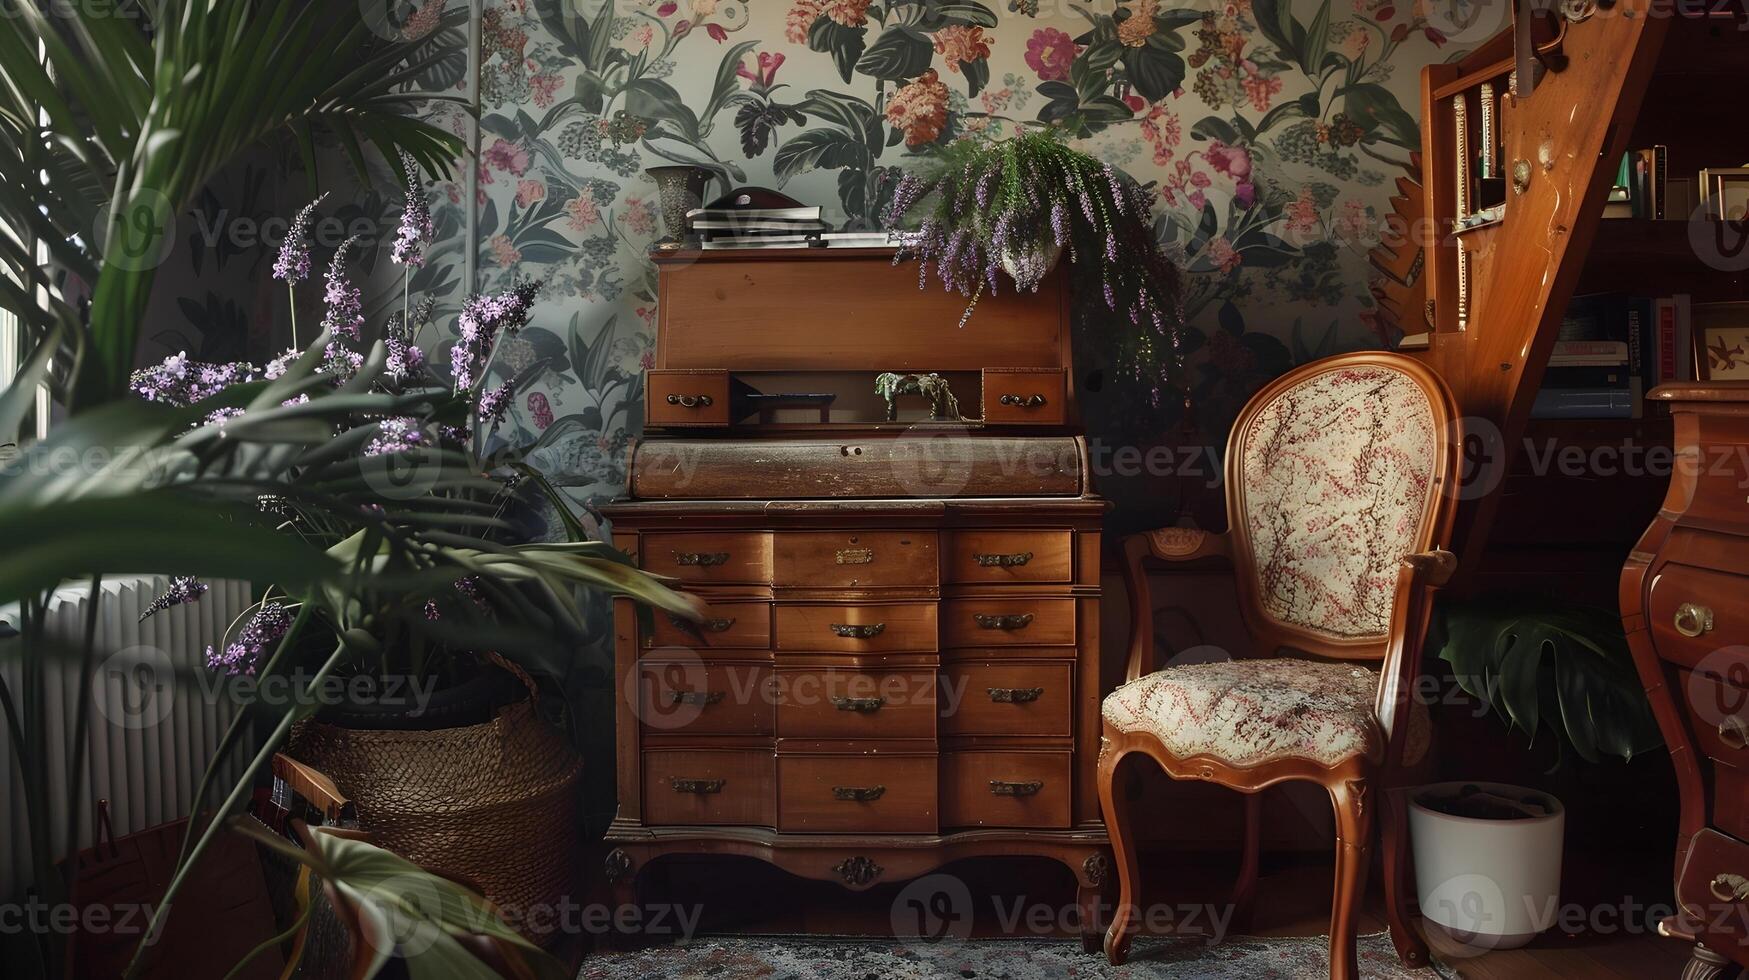 årgång Hem studie elegant ek skrivbord i en blommig chintz rum med lavendel- accenter foto